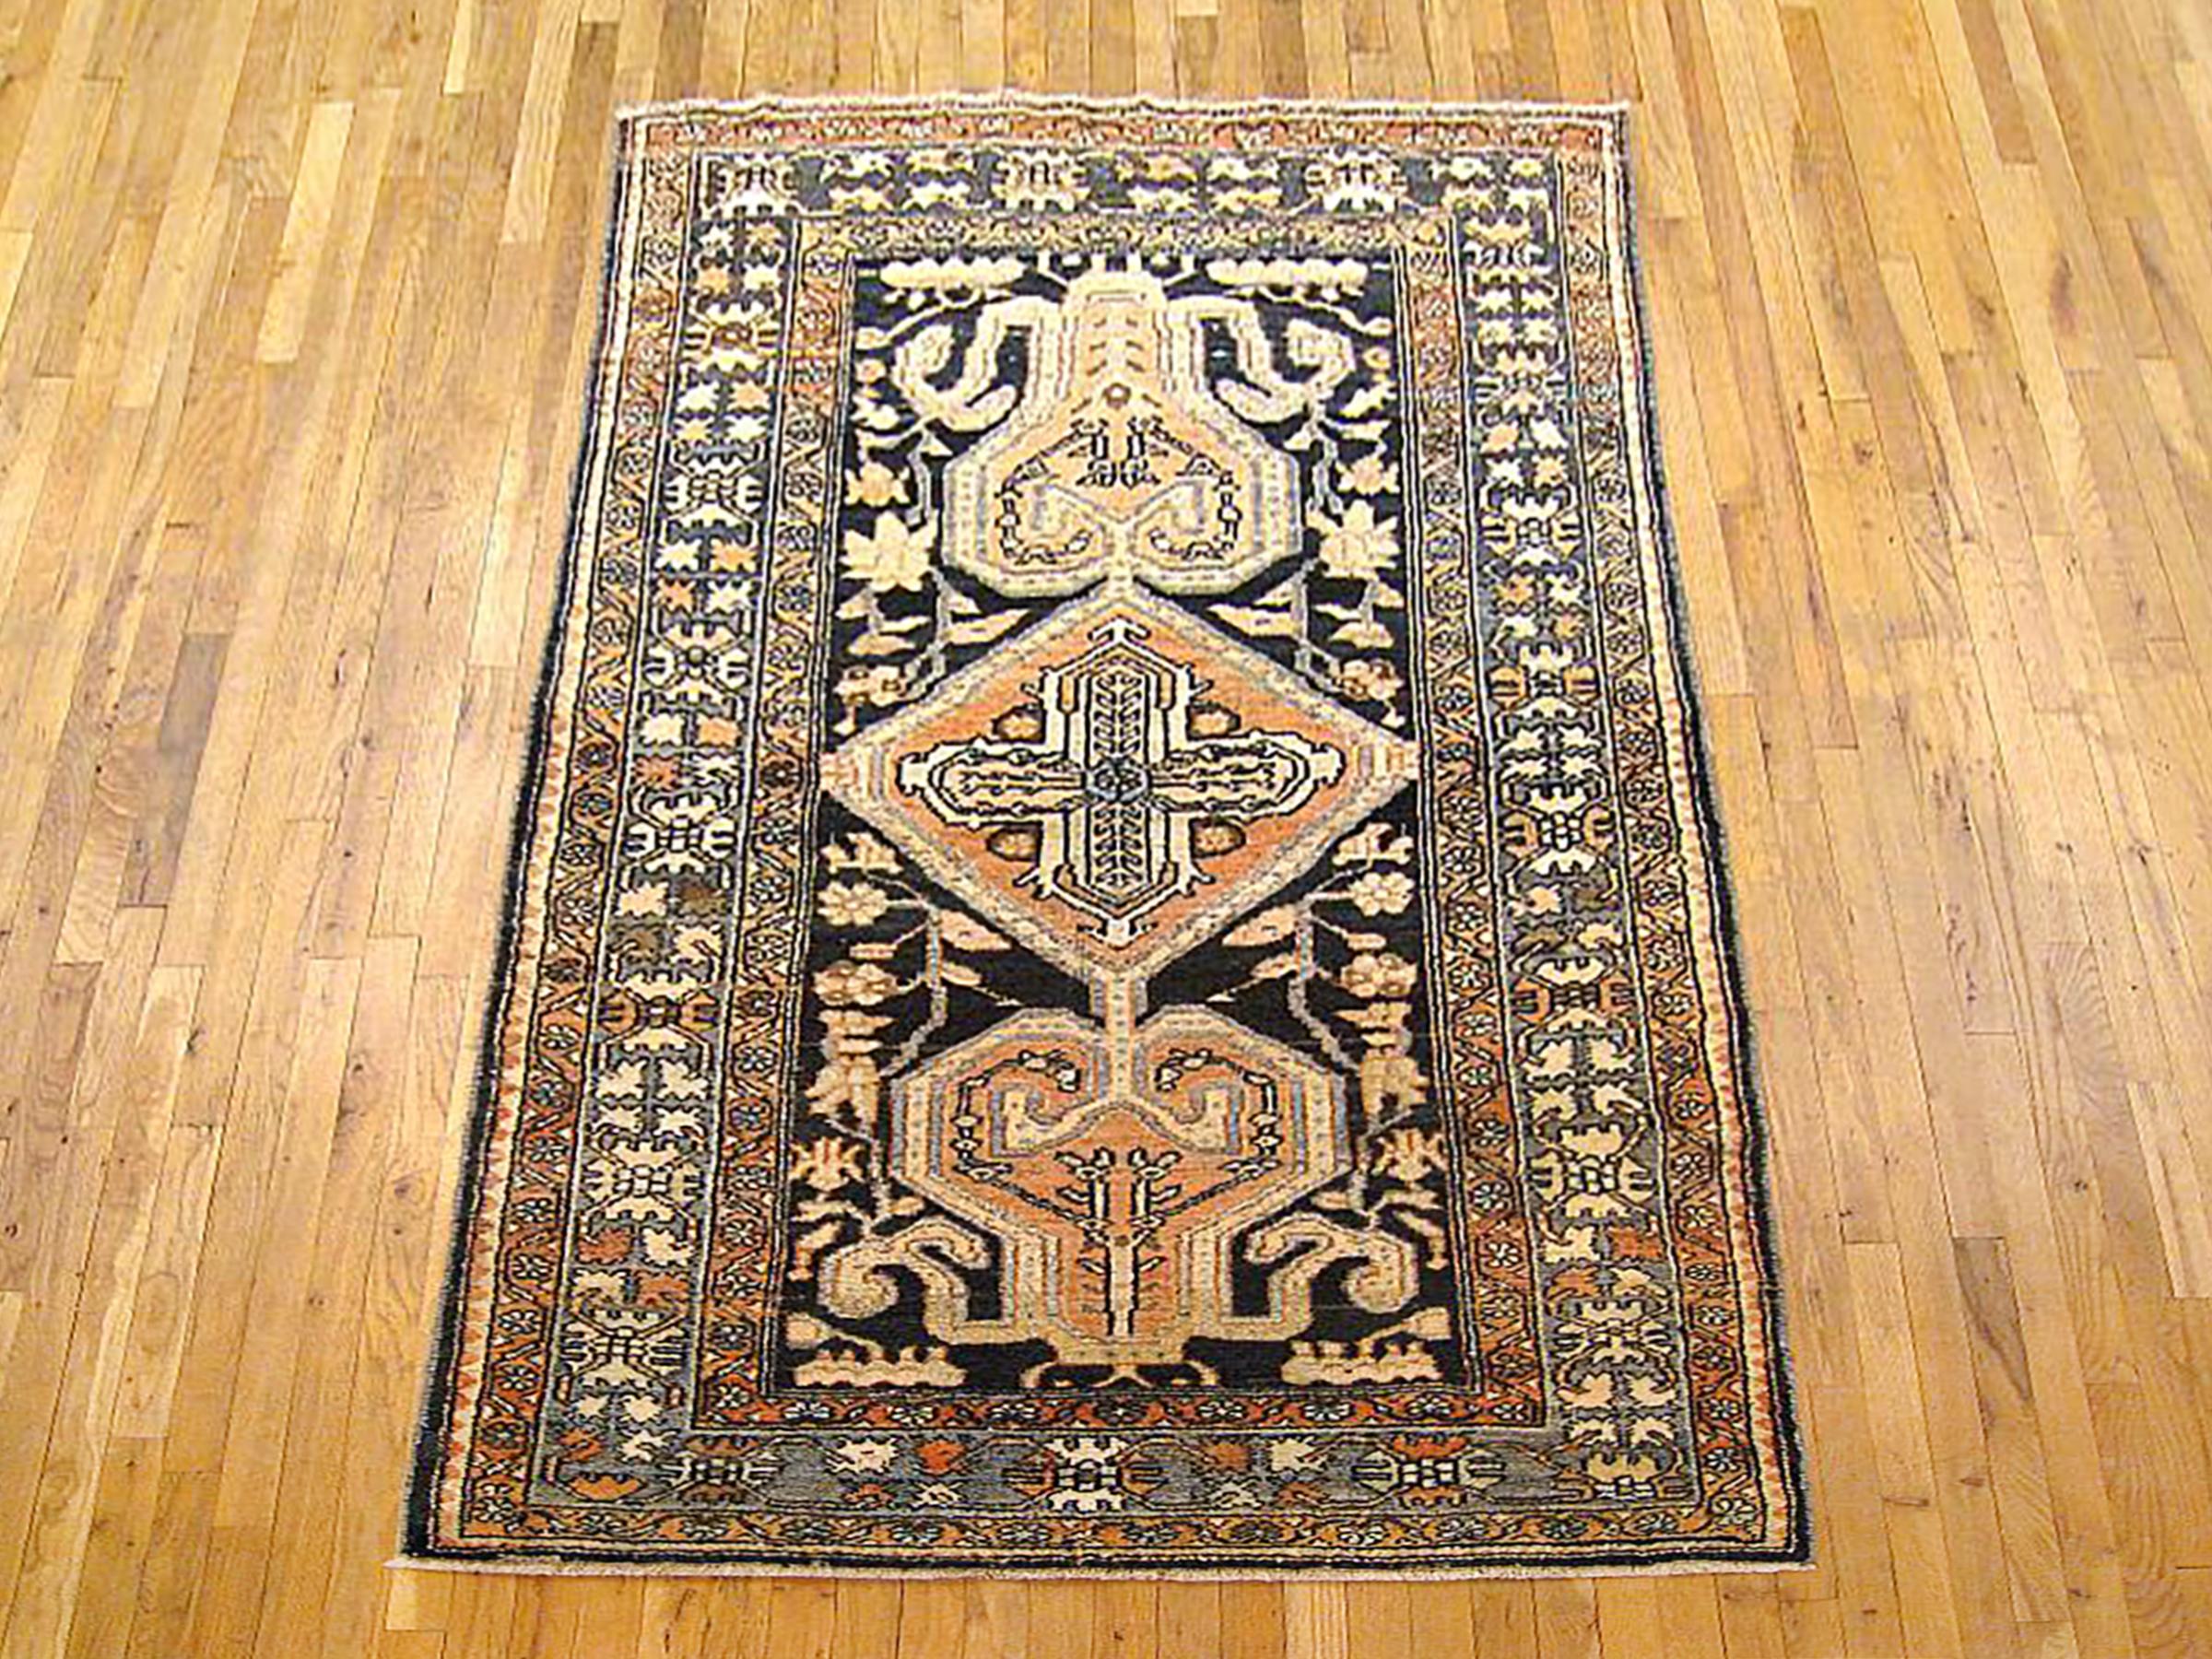 Antique Persian Baktiari Oriental rug, small size

An antique Baktiari oriental rug, size 6'8